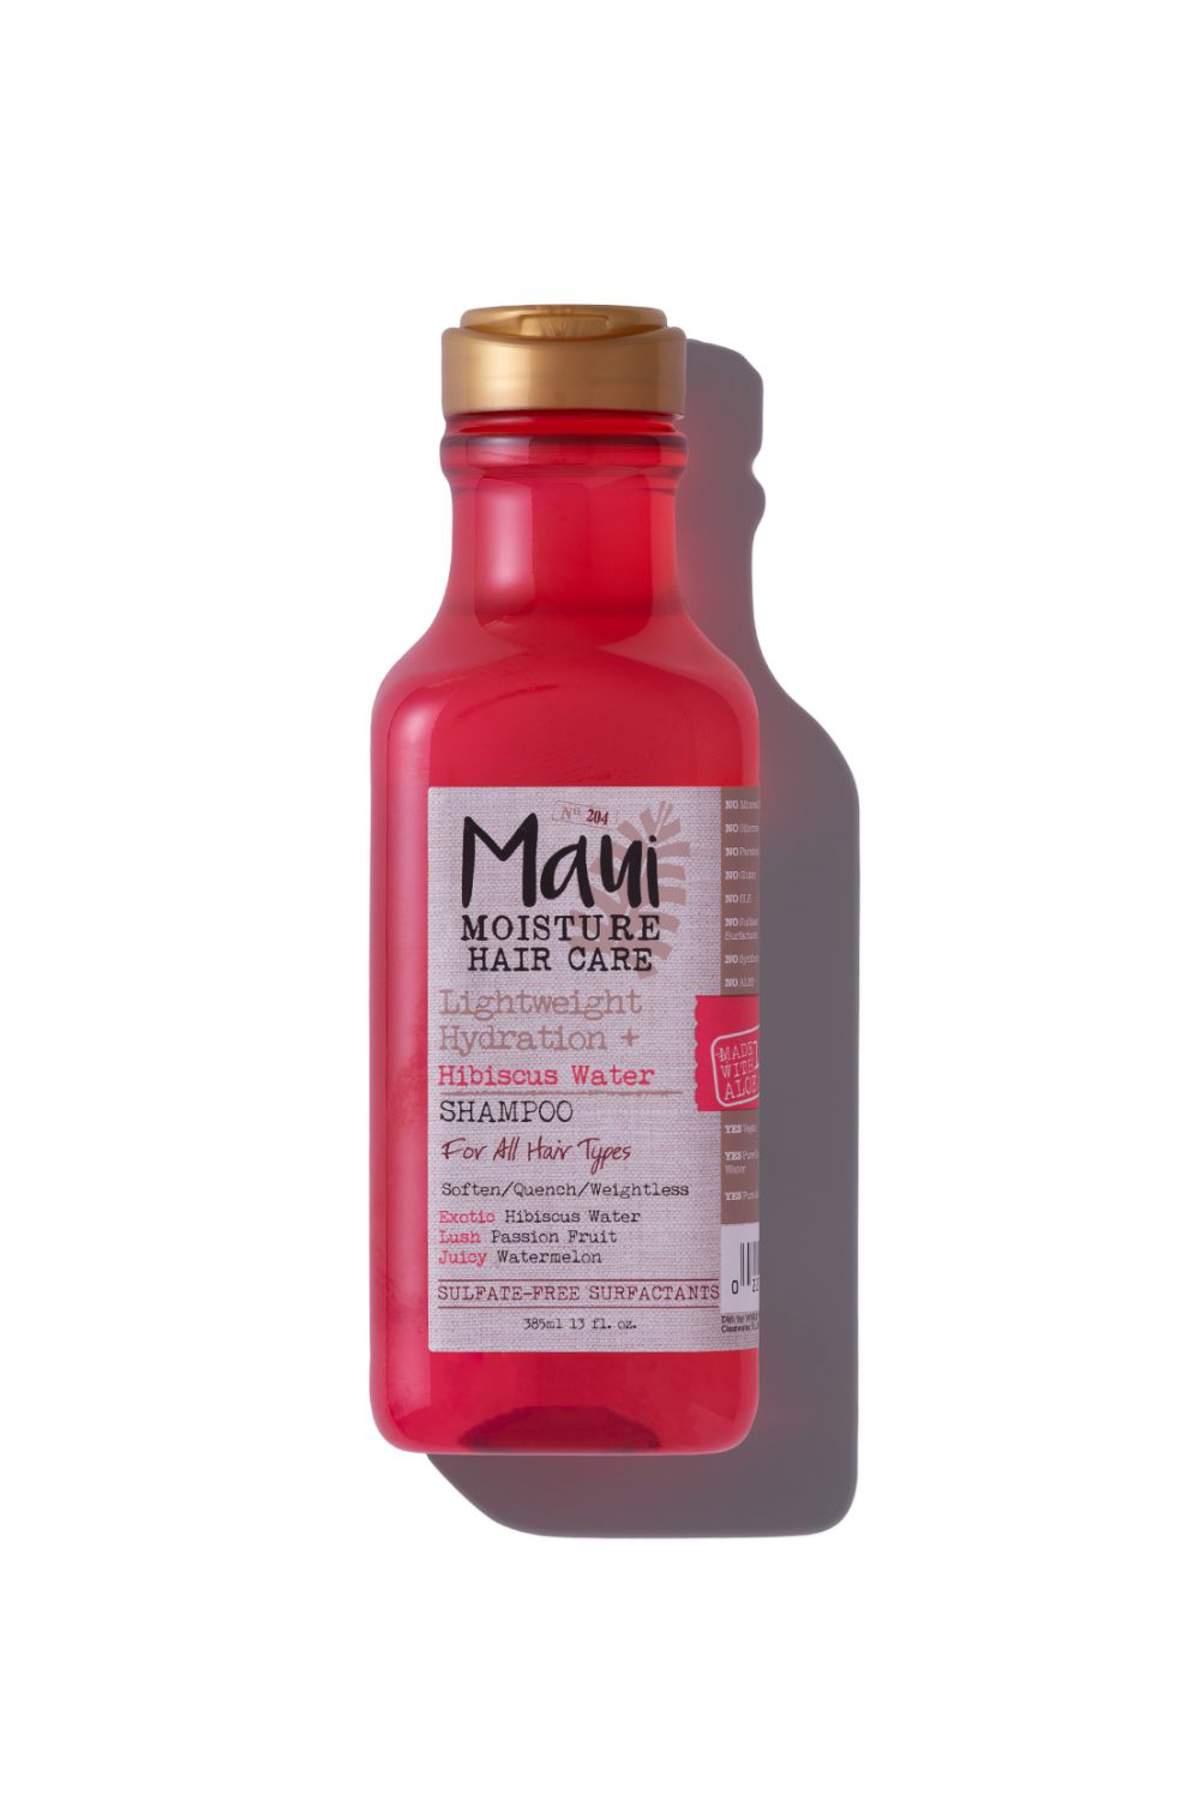 Lightweight Hydration + Hibiscus Water Shampoo de Maui